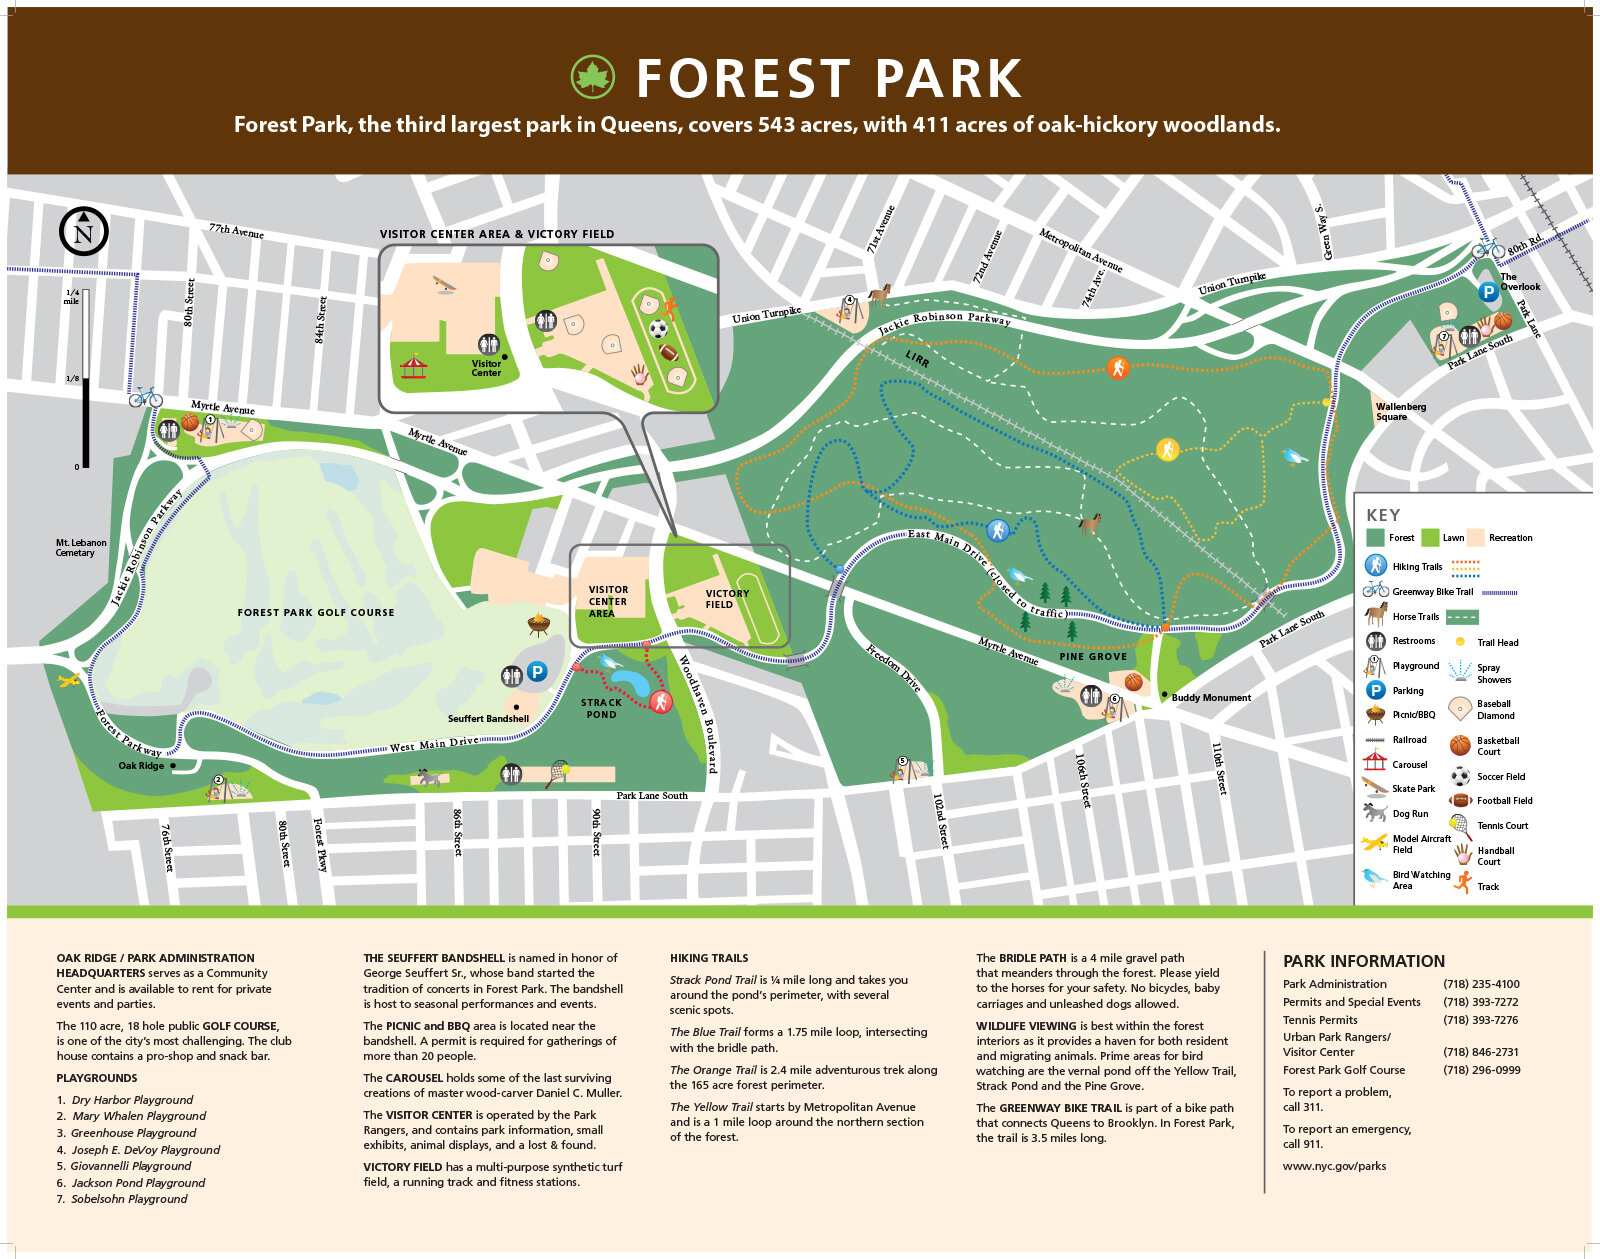 I Love Forest Park 5K — Forest Park Forever